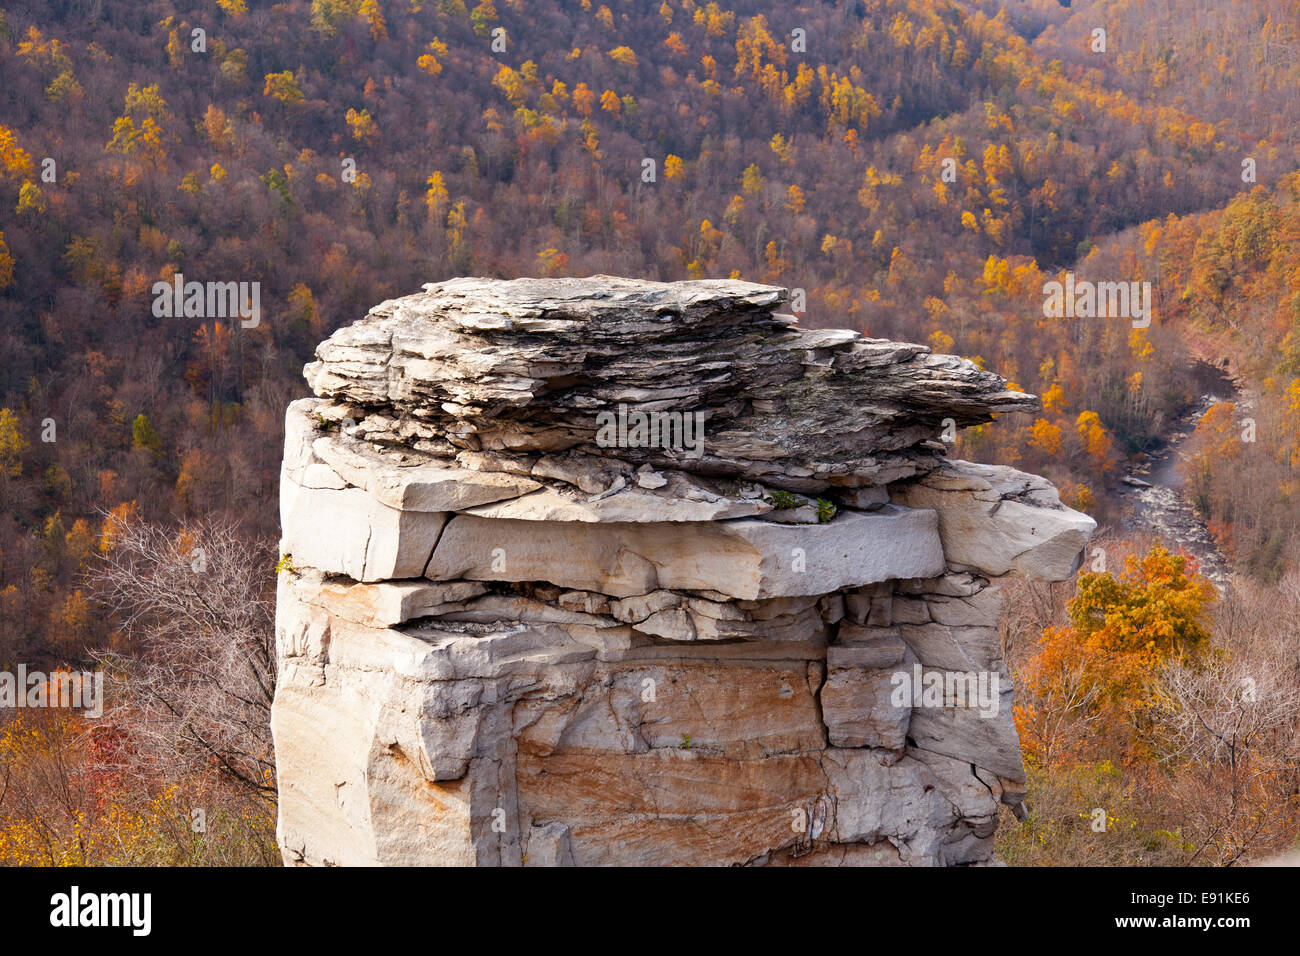 Craggy rocks in autumn Stock Photo